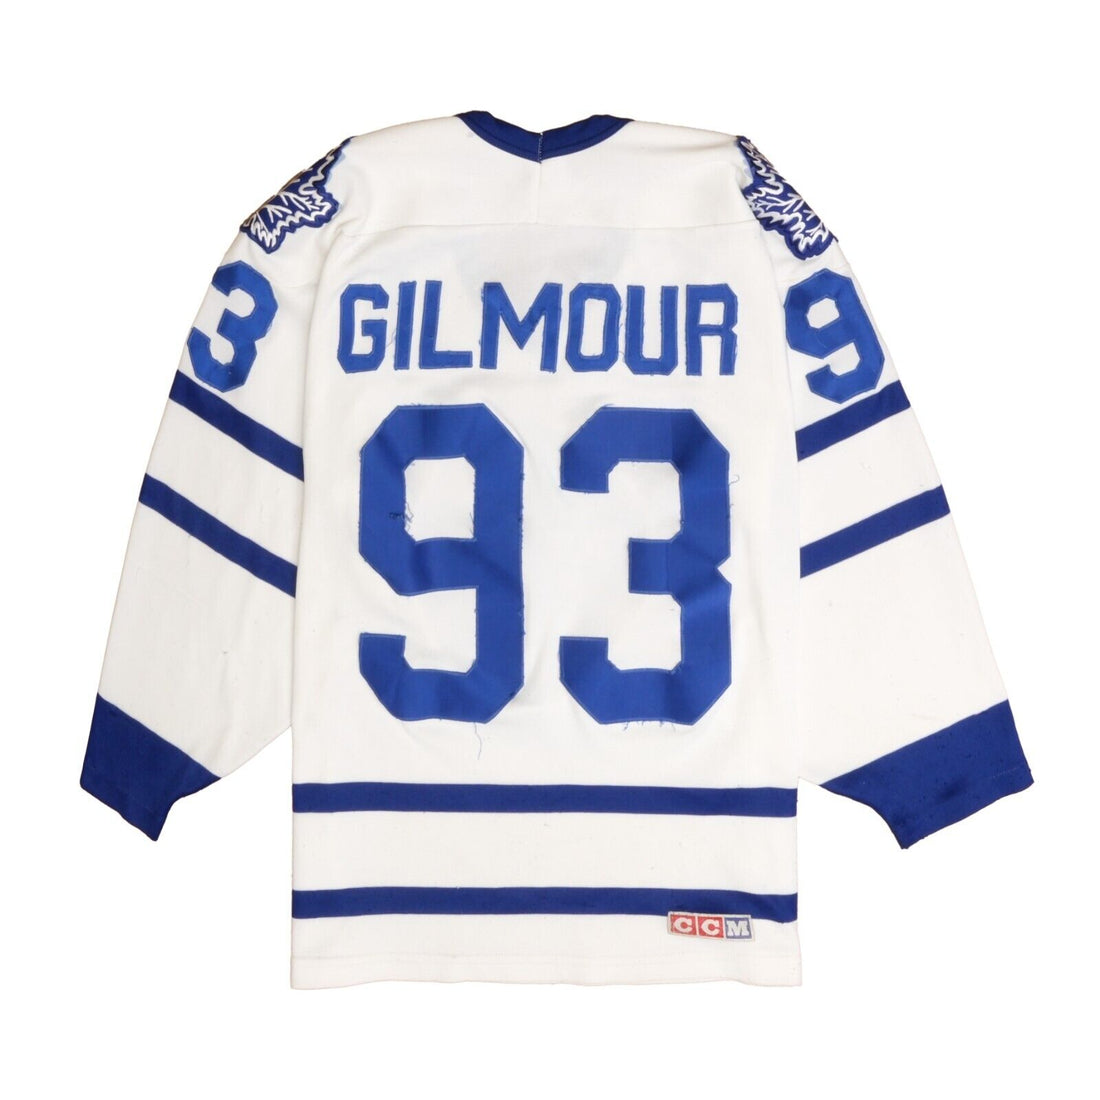 Vintage Toronto Maple Leafs Doug Gilmour CCM Maska Jersey Size Small NHL